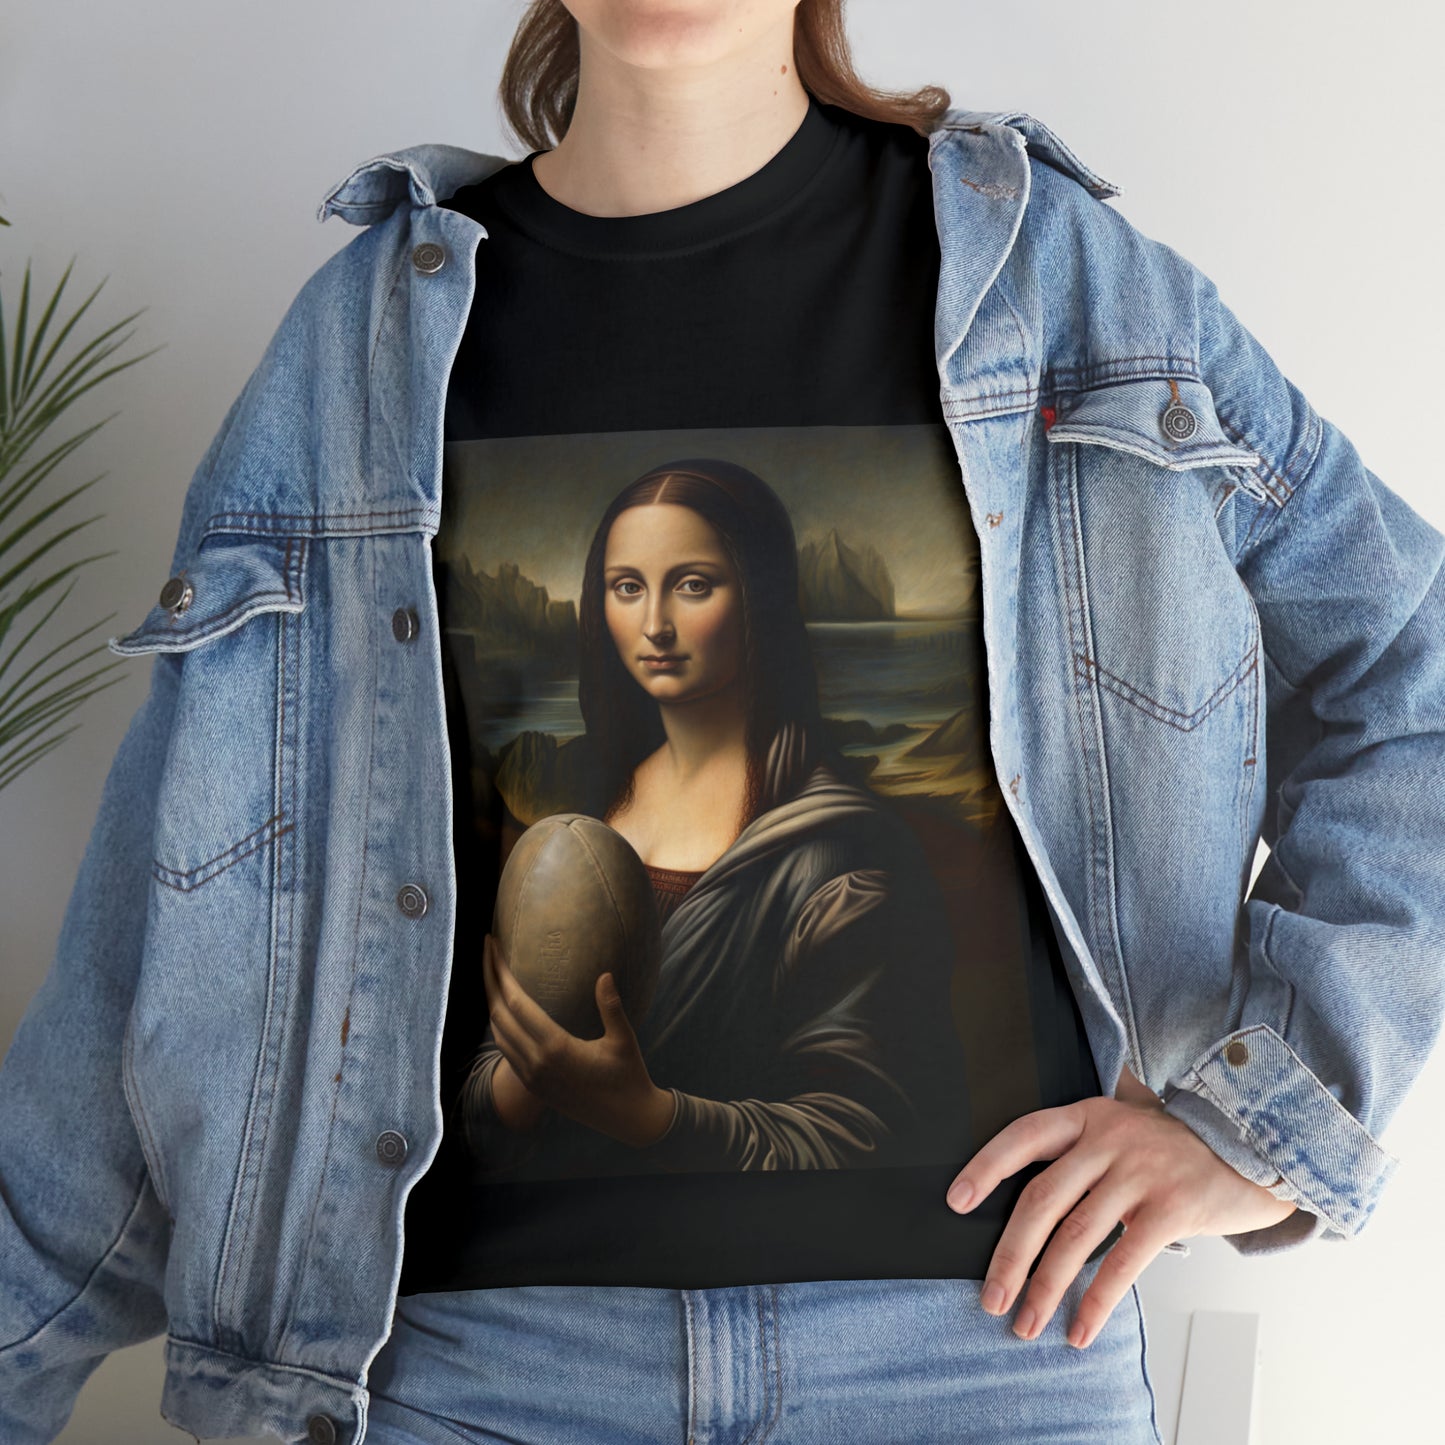 Mona Lisa Rugby - dark shirts